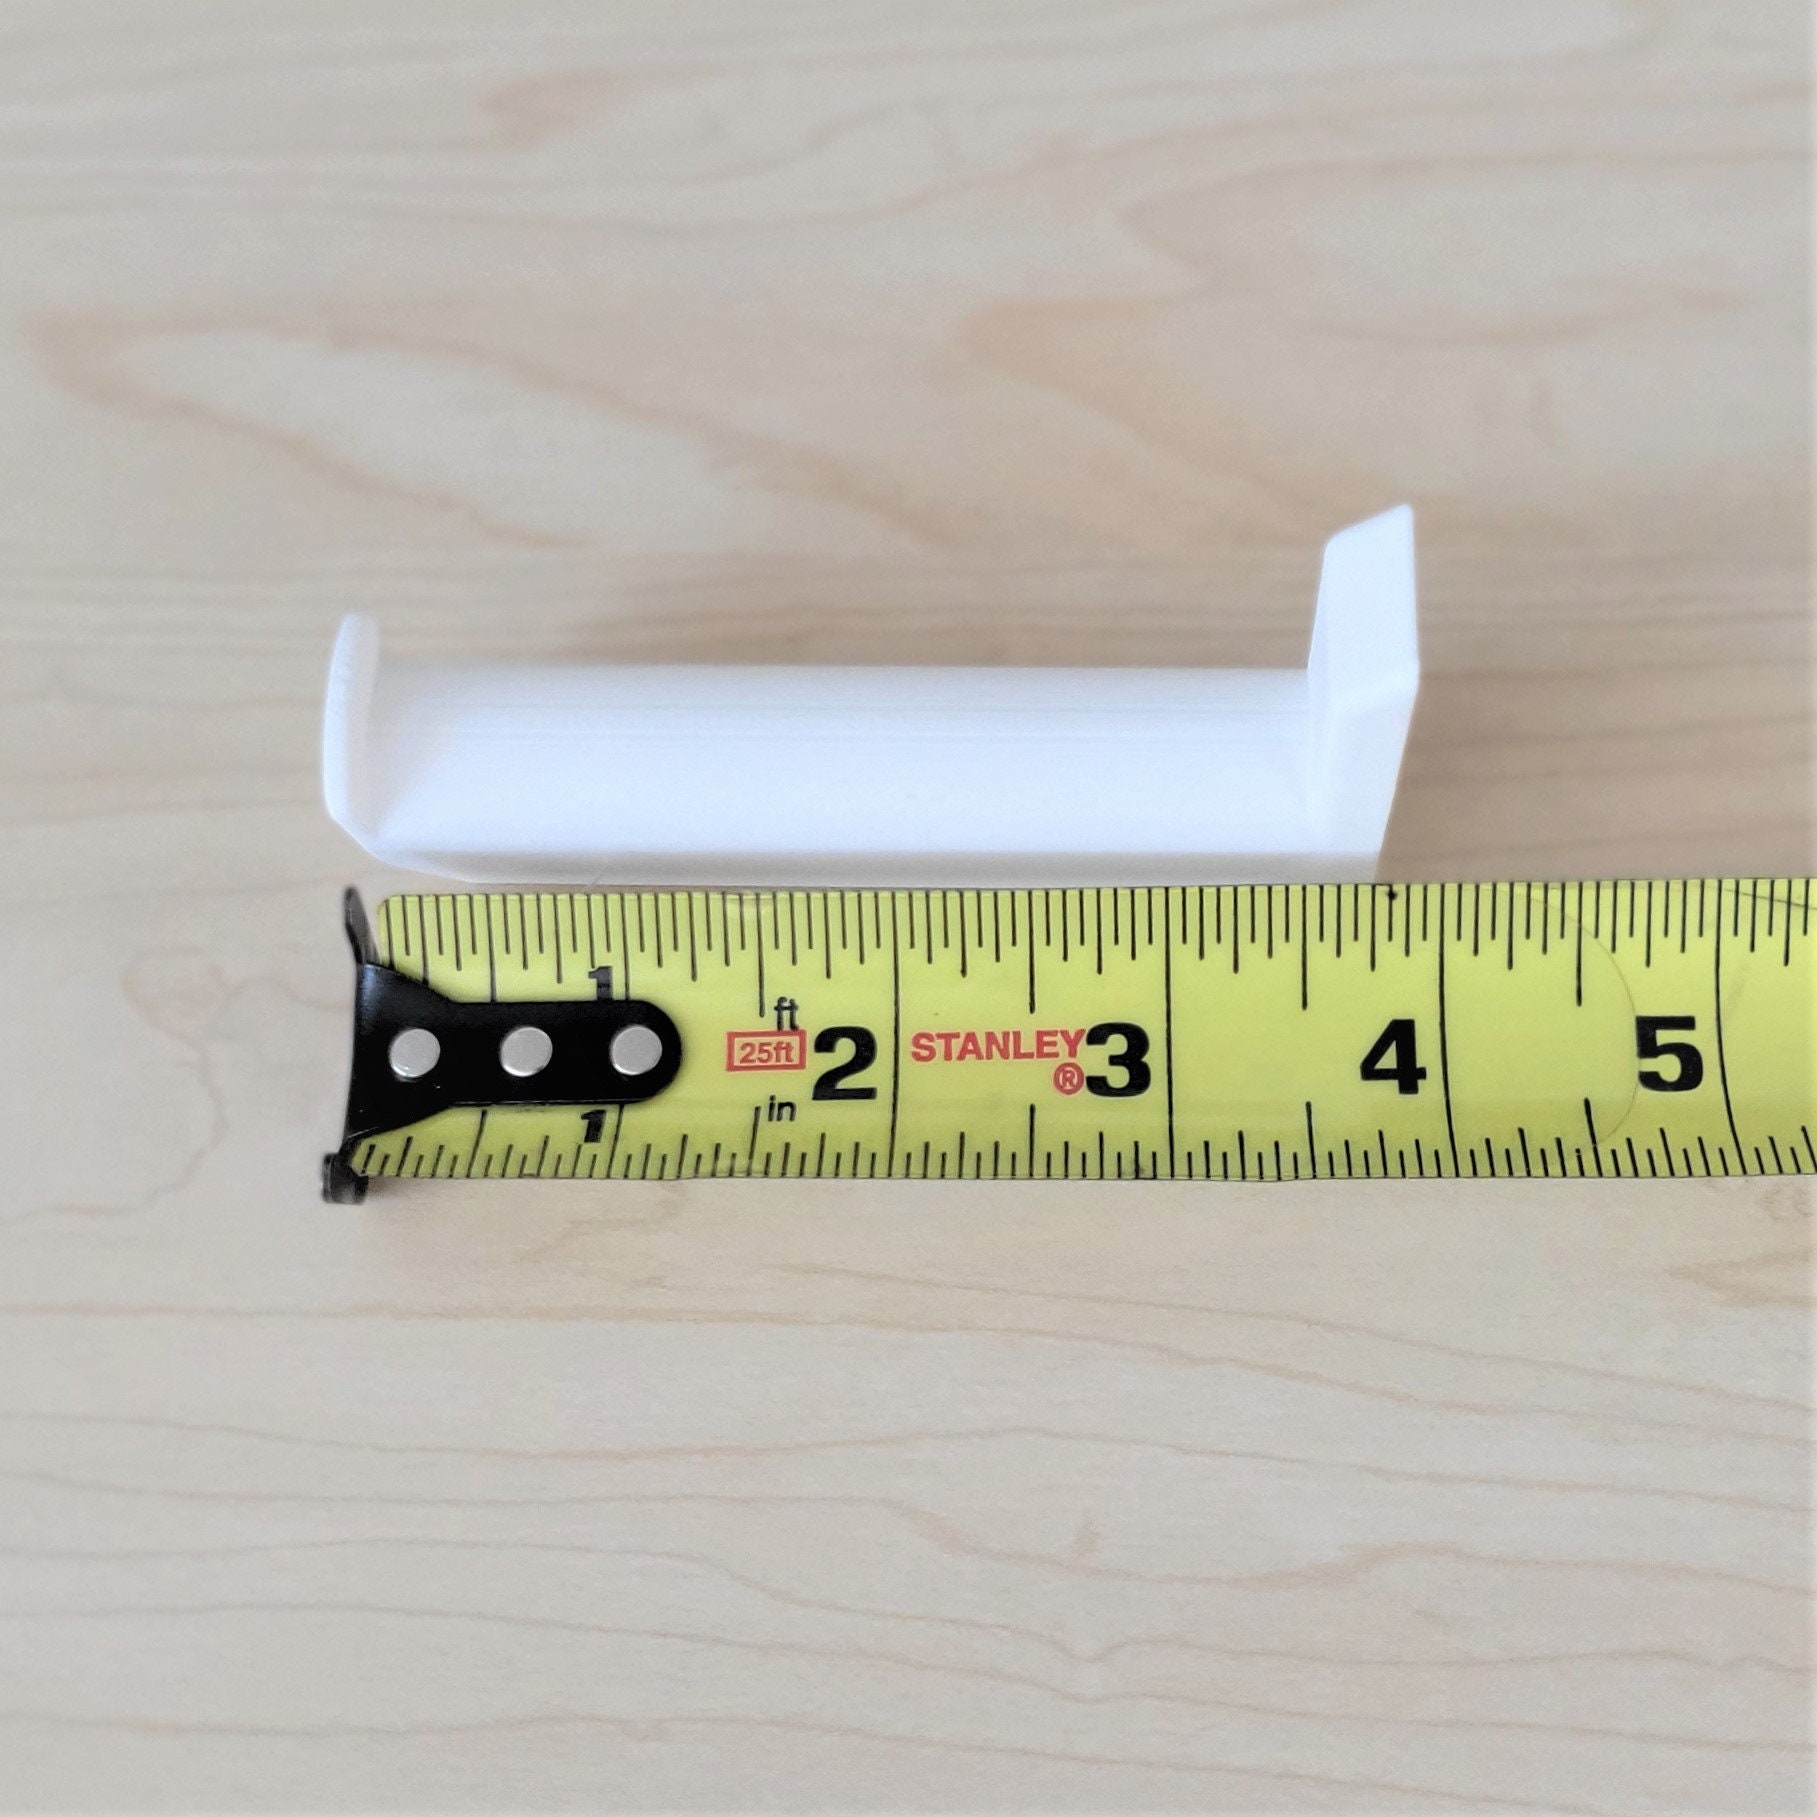 Free STL file Cricut Maker Roll holder 👽・3D printer design to